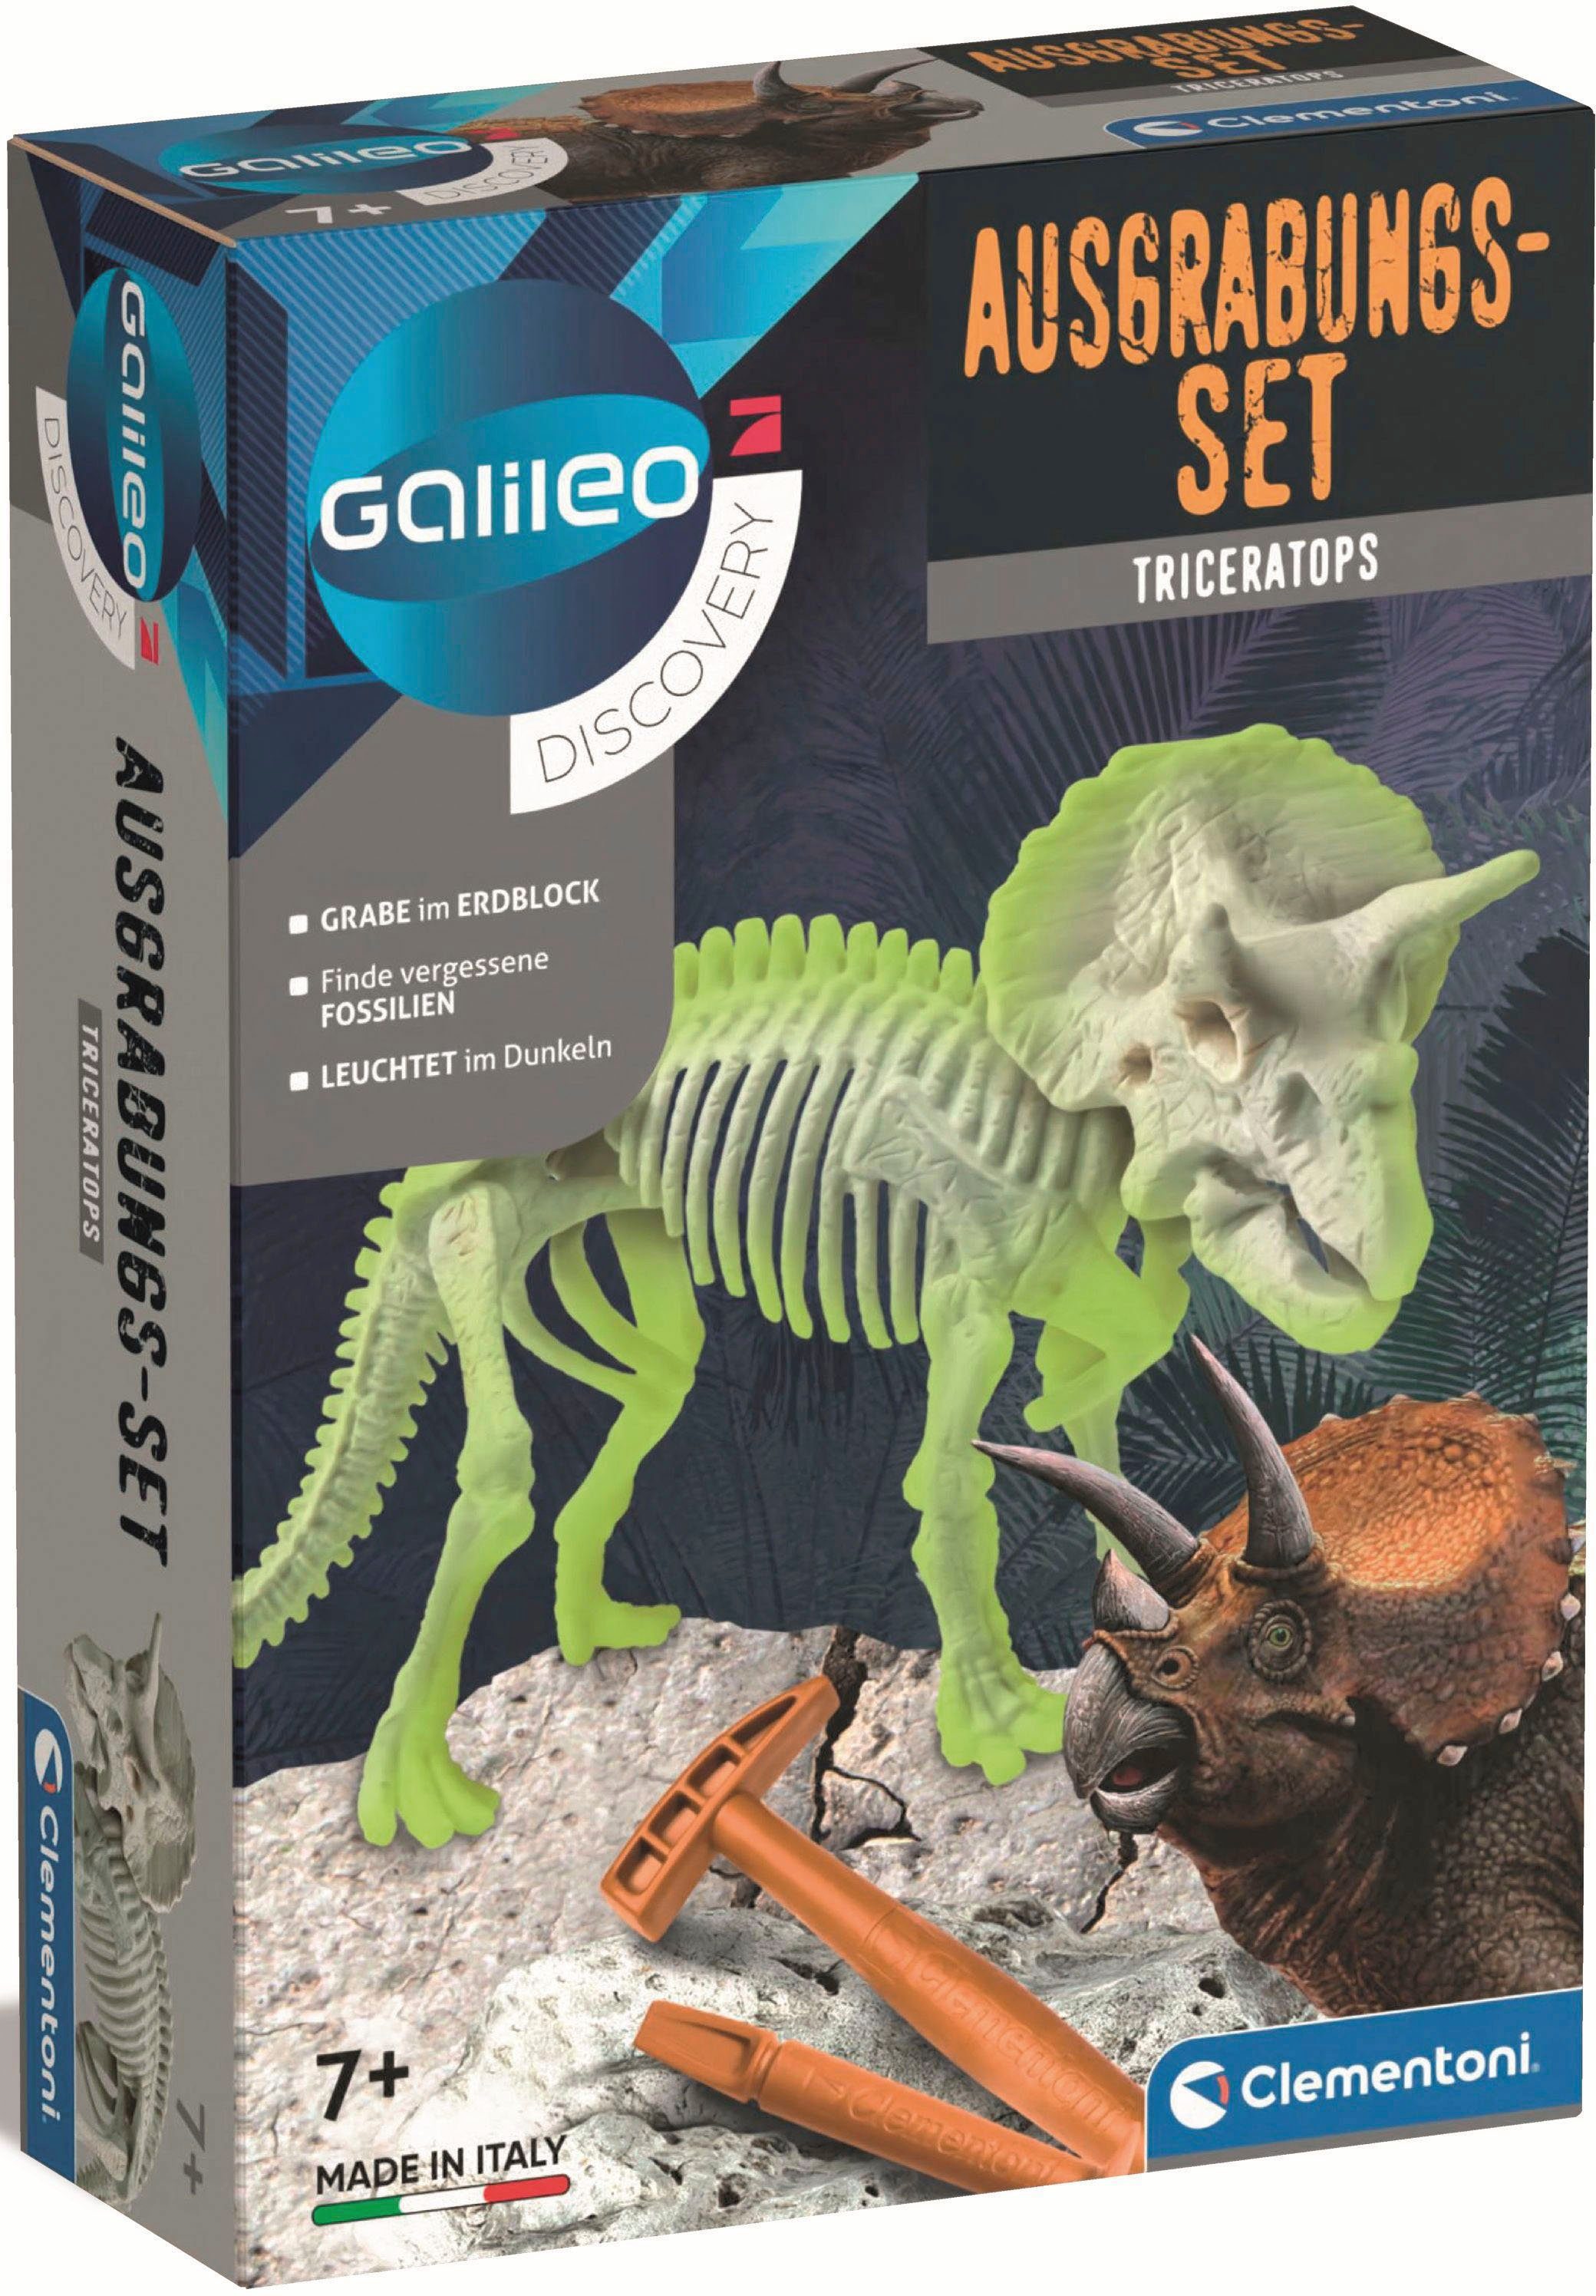 Clementoni® Experimentierkasten Galileo, Ausgrabungs-Set Triceratops, Made in Europe